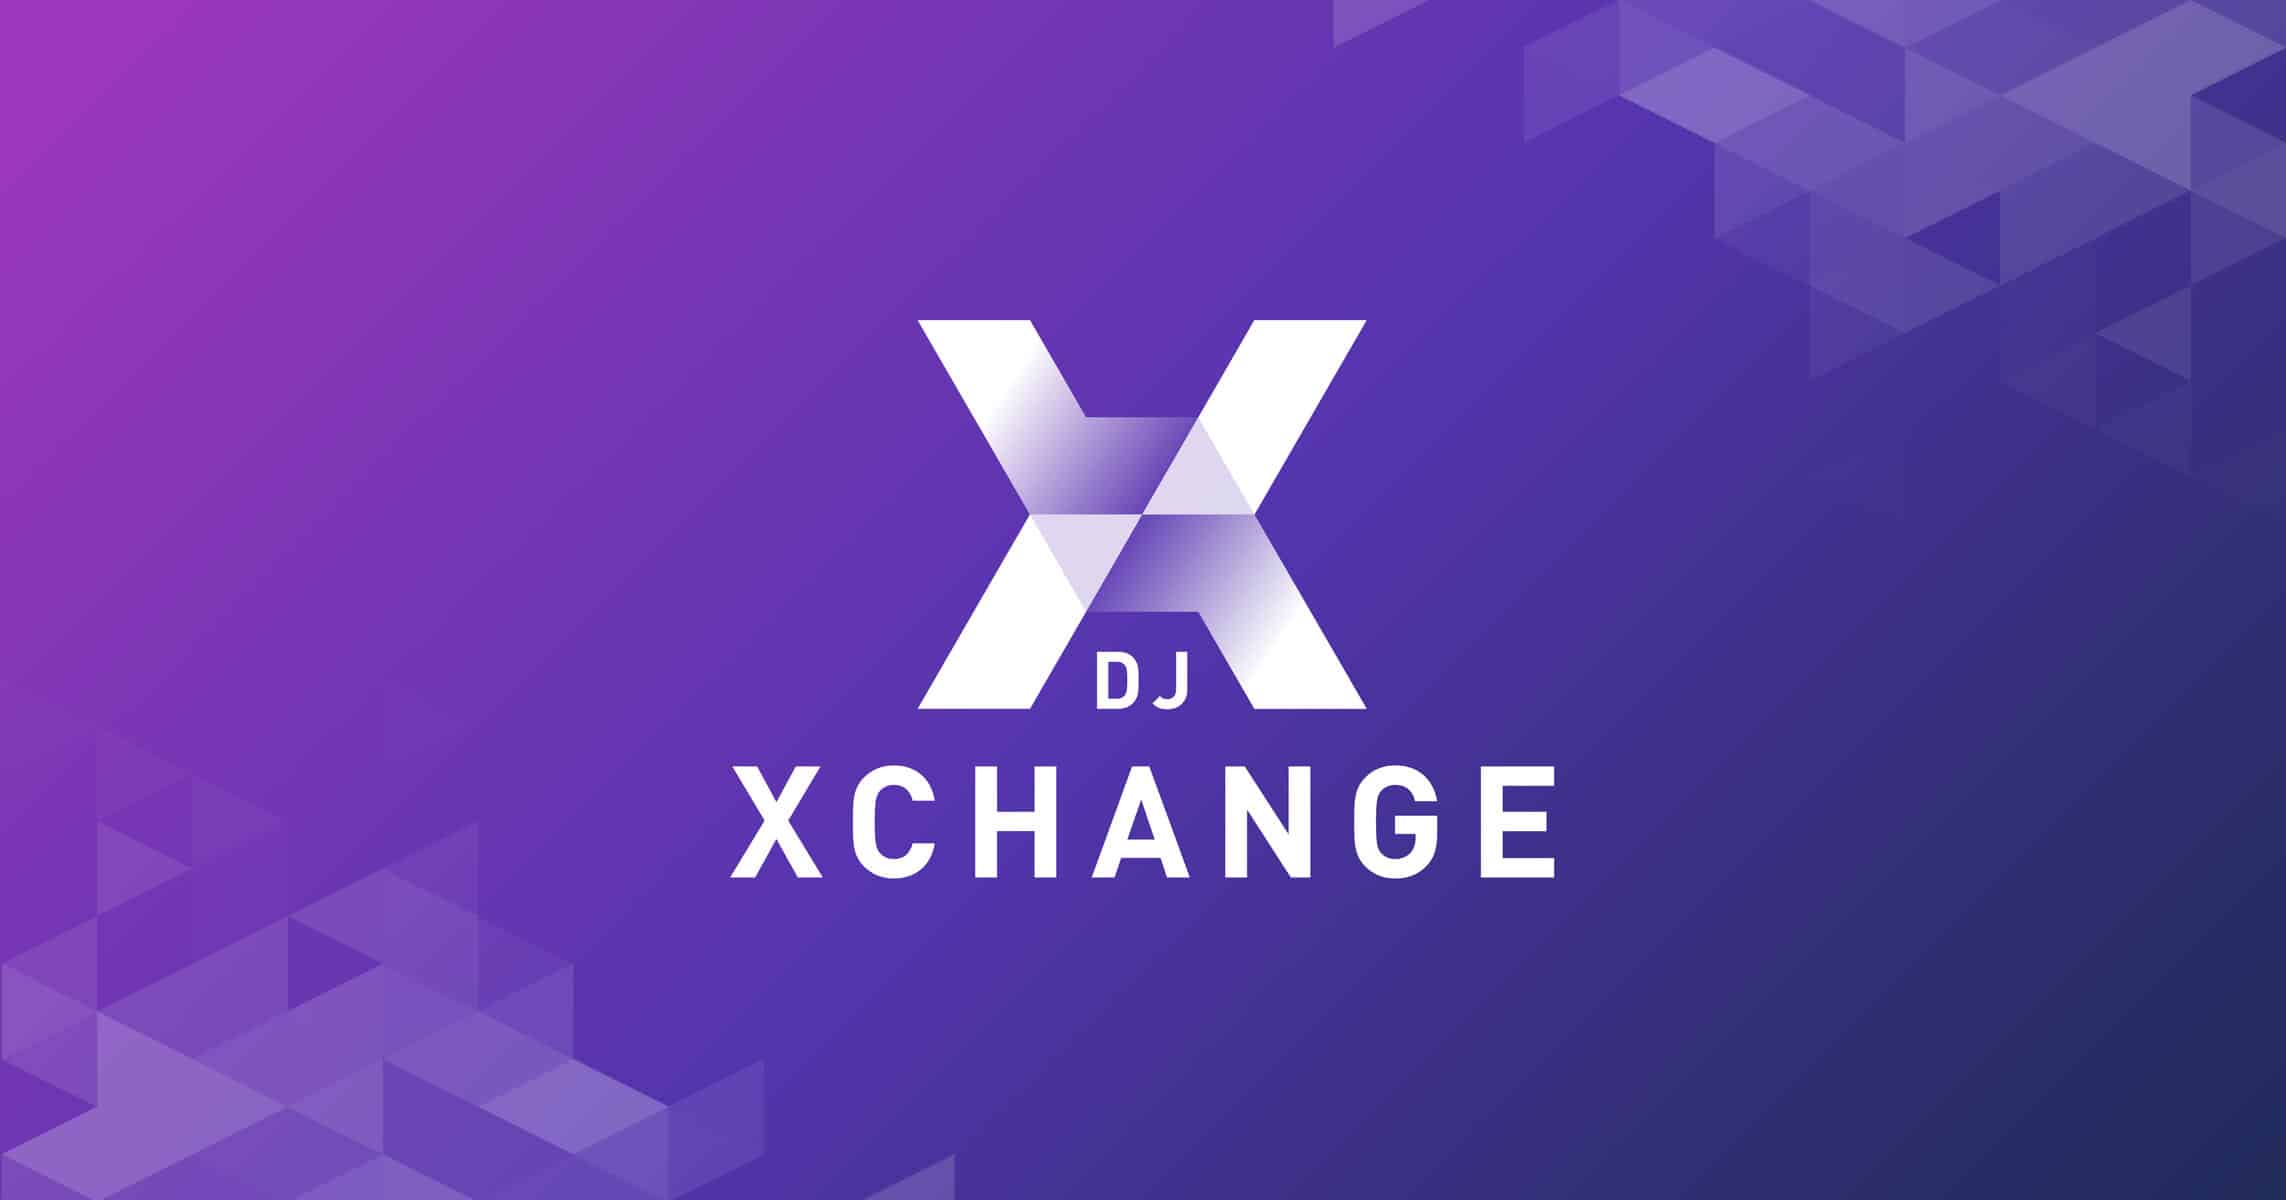 Digital Jersey Xchange (DJX) | Digital Jersey